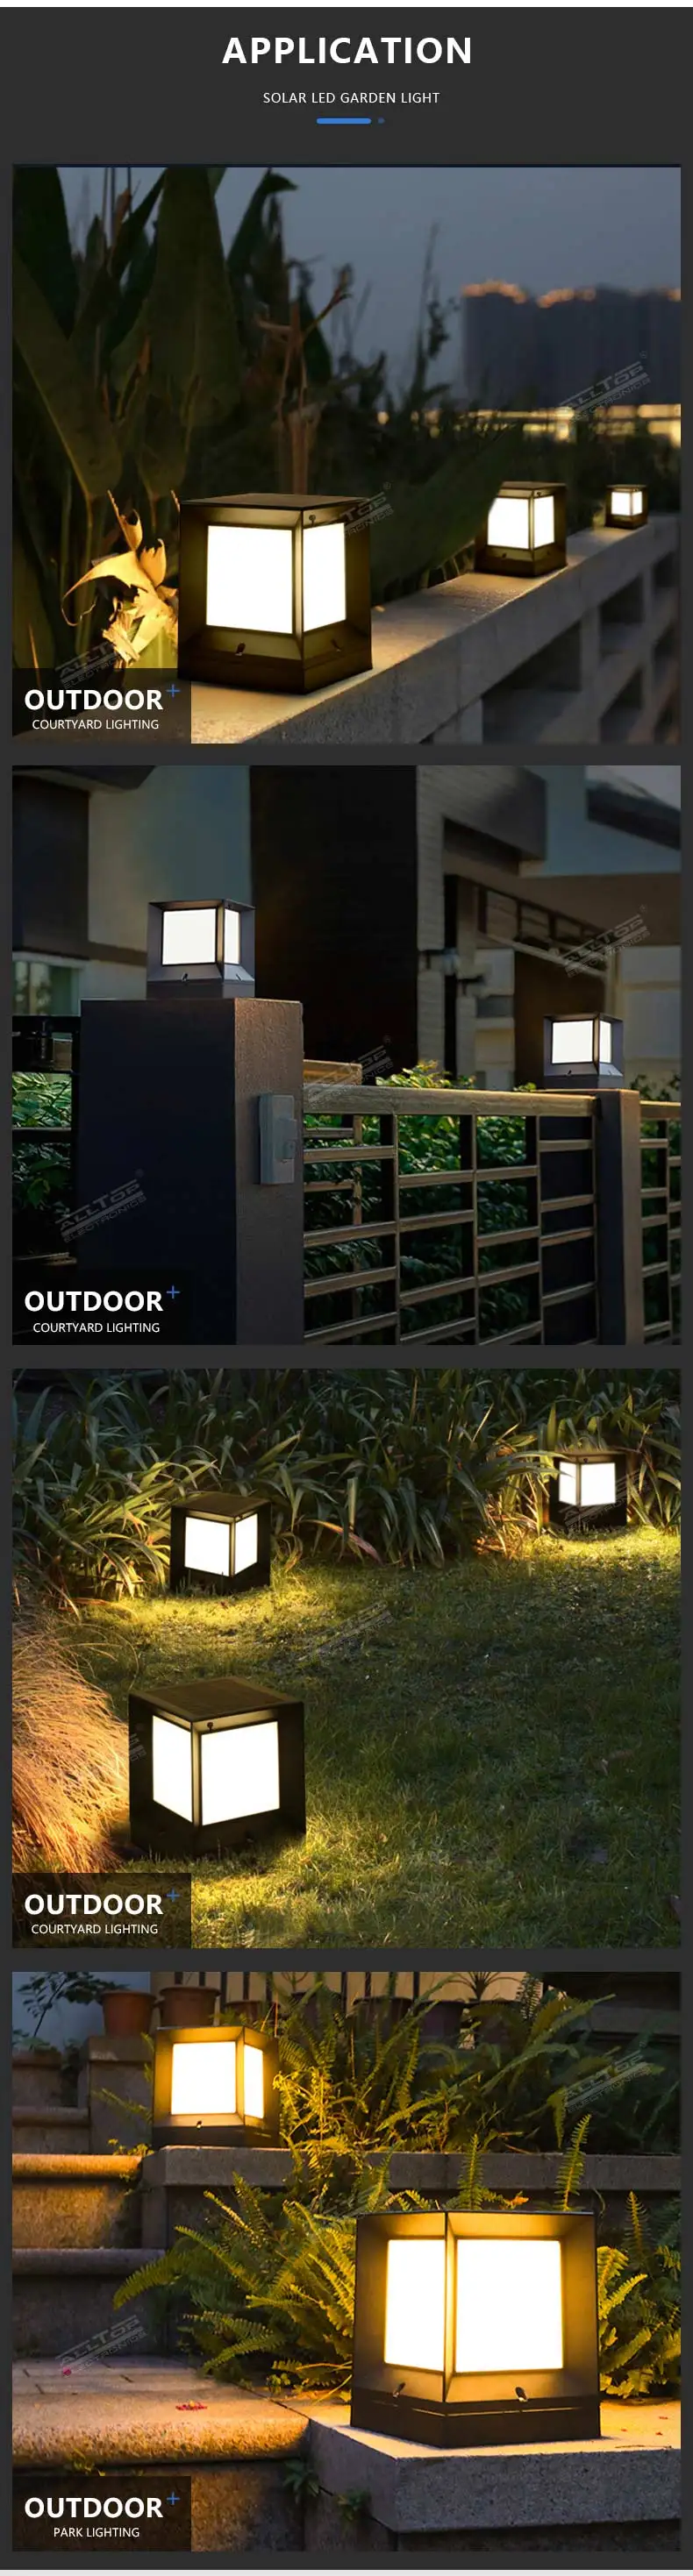 ALLTOP Competitive price garden light solar outdoor all in one 5w LED solar garden light waterproof